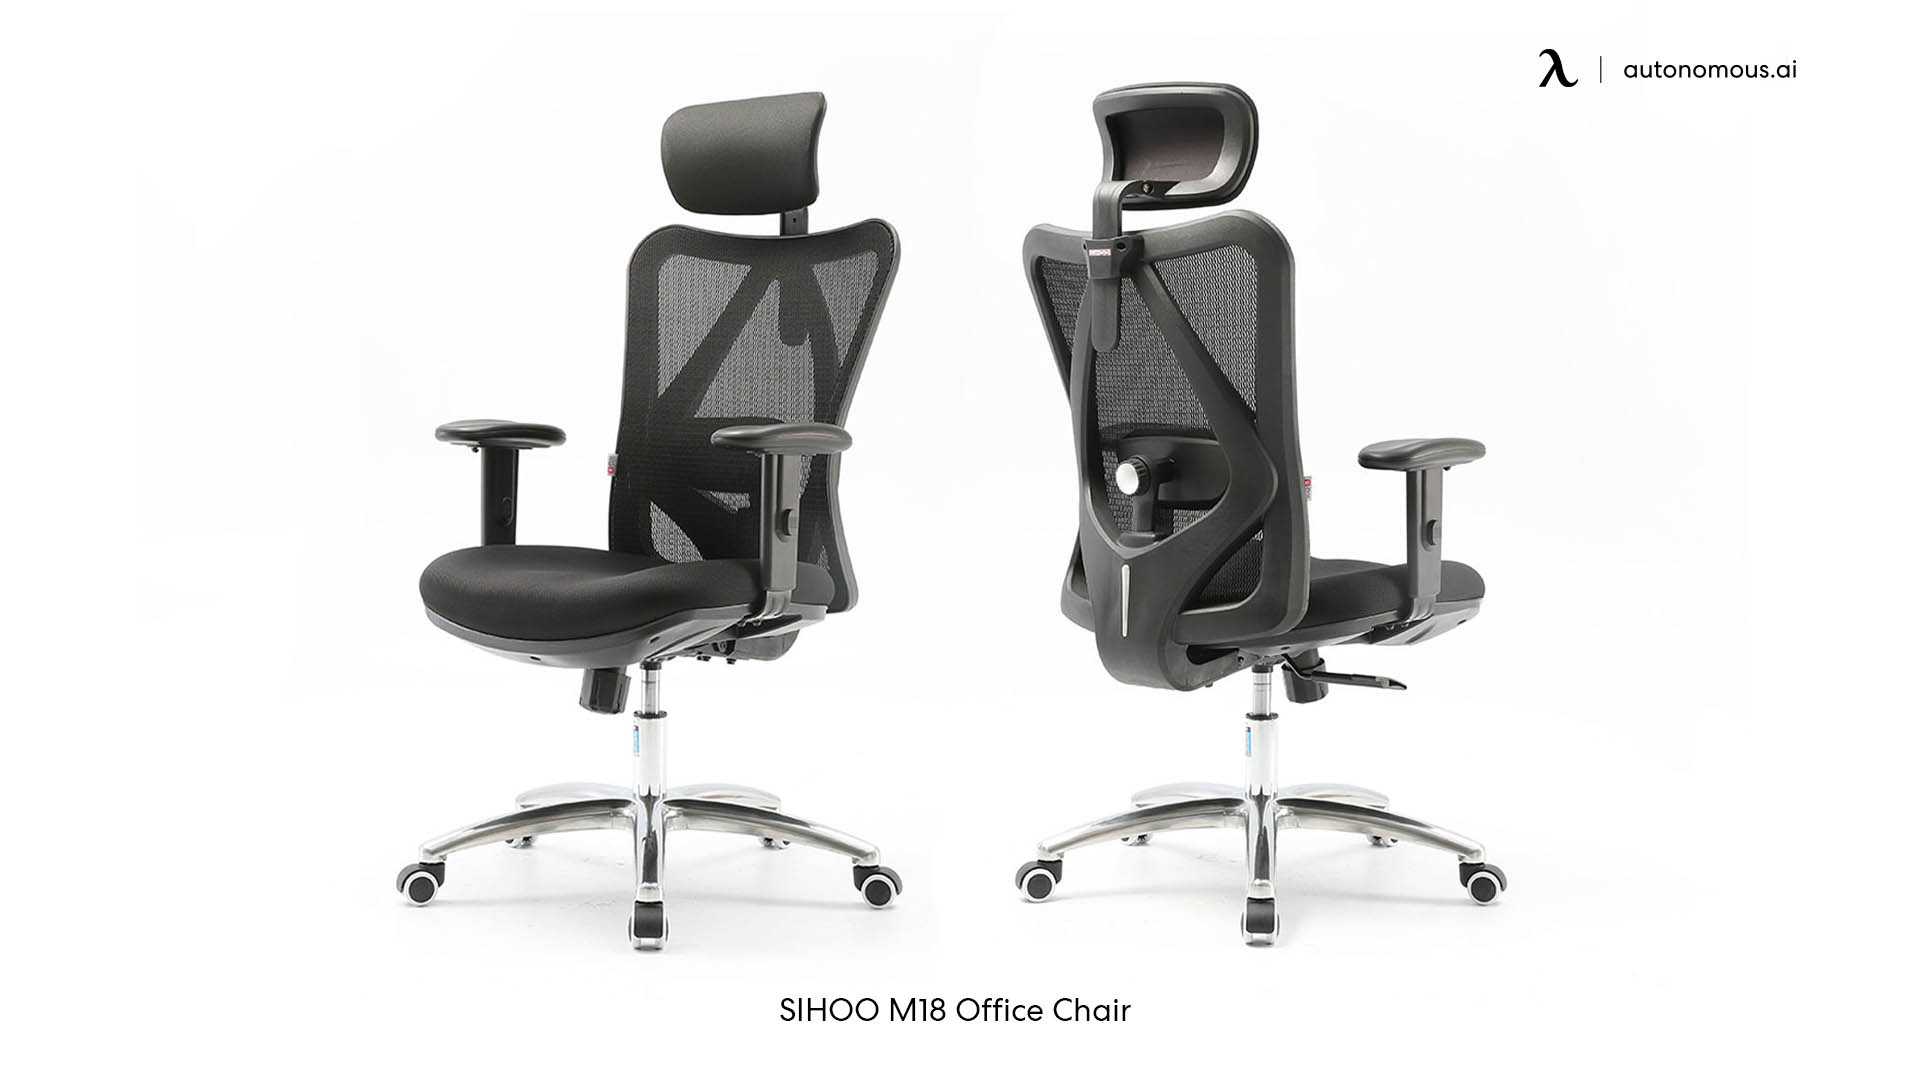 SIHOO M18 Office Chair